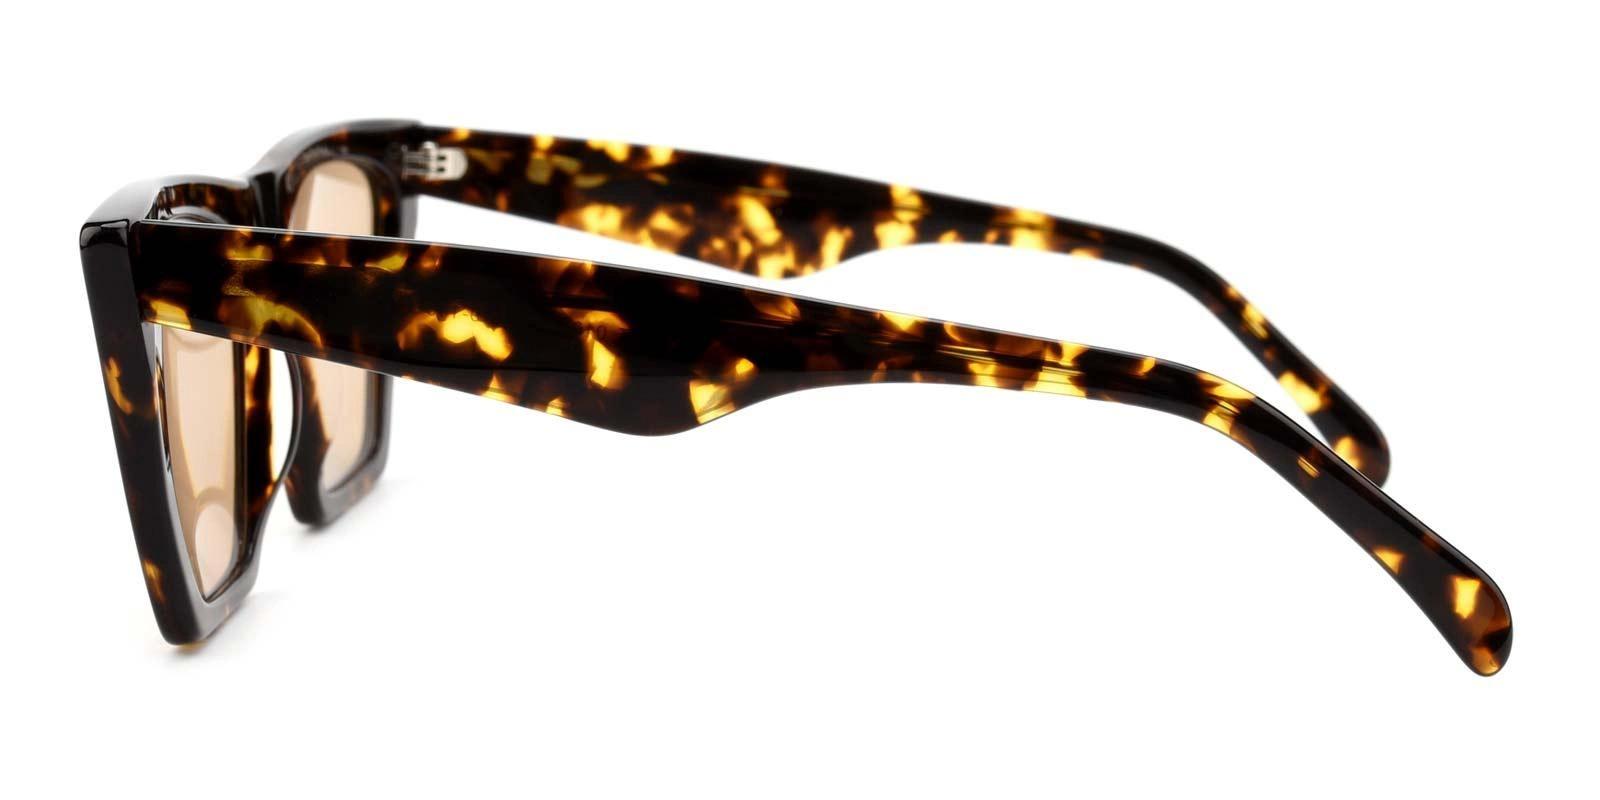 Igling Tortoise Acetate Sunglasses , UniversalBridgeFit Frames from ABBE Glasses